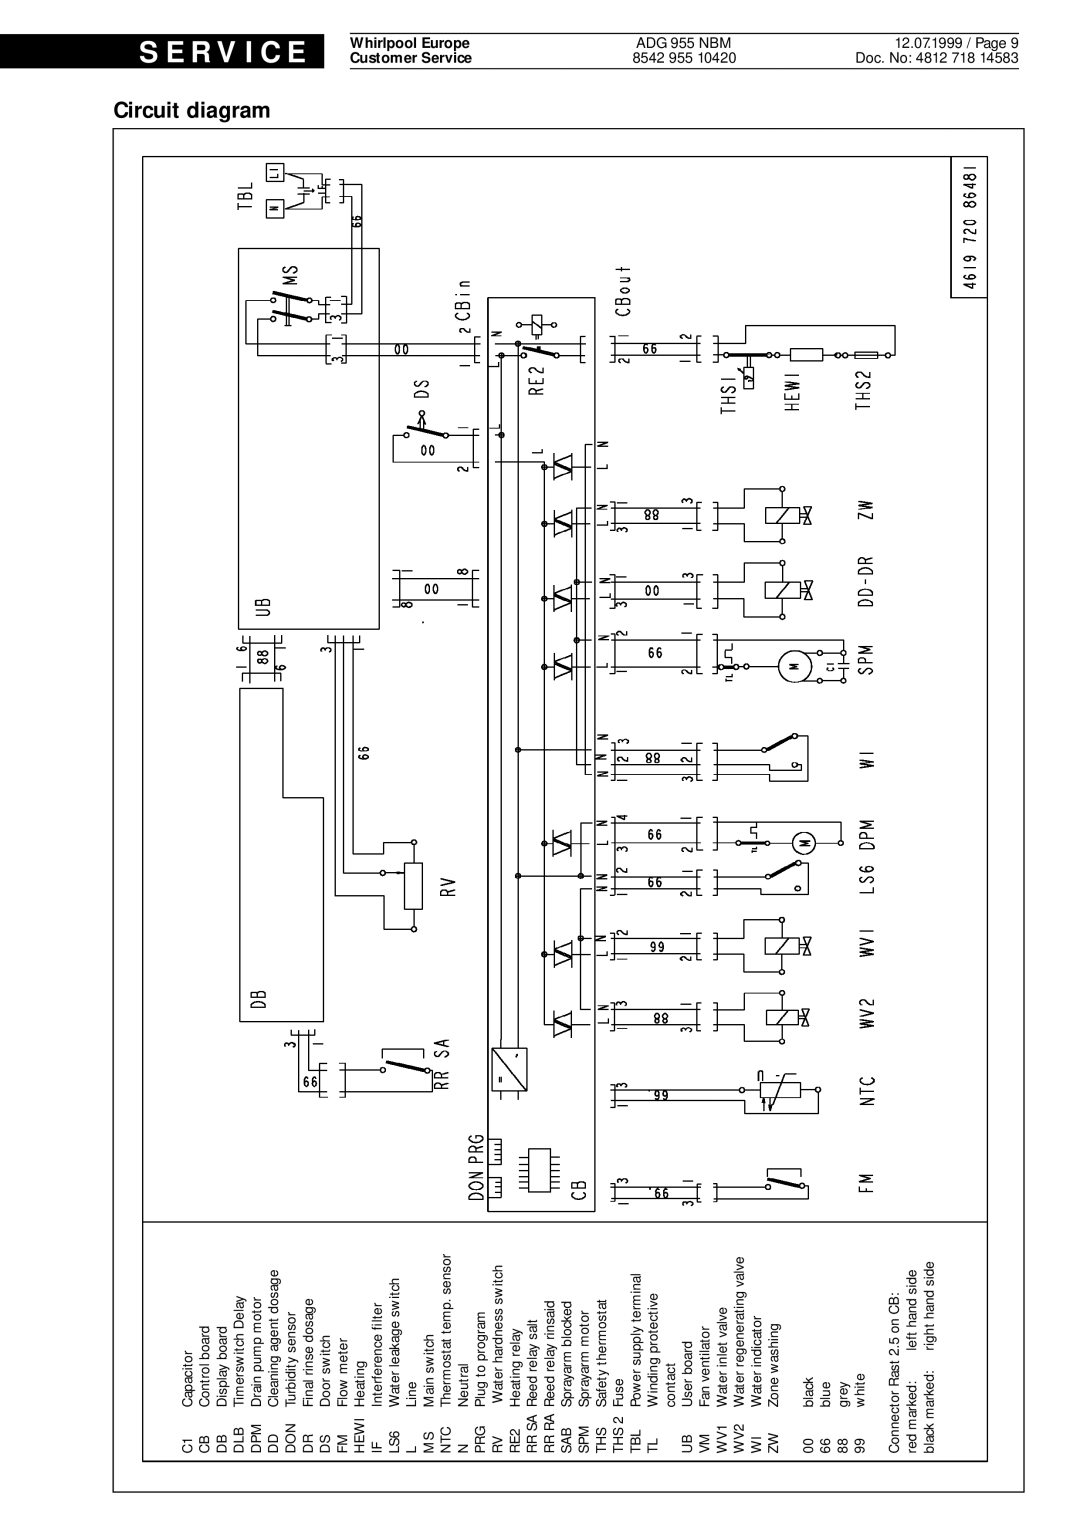 Whirlpool ADG 955 NBM service manual Circuit, diagram, R V I C, Whirlpool Europe Customer Service 